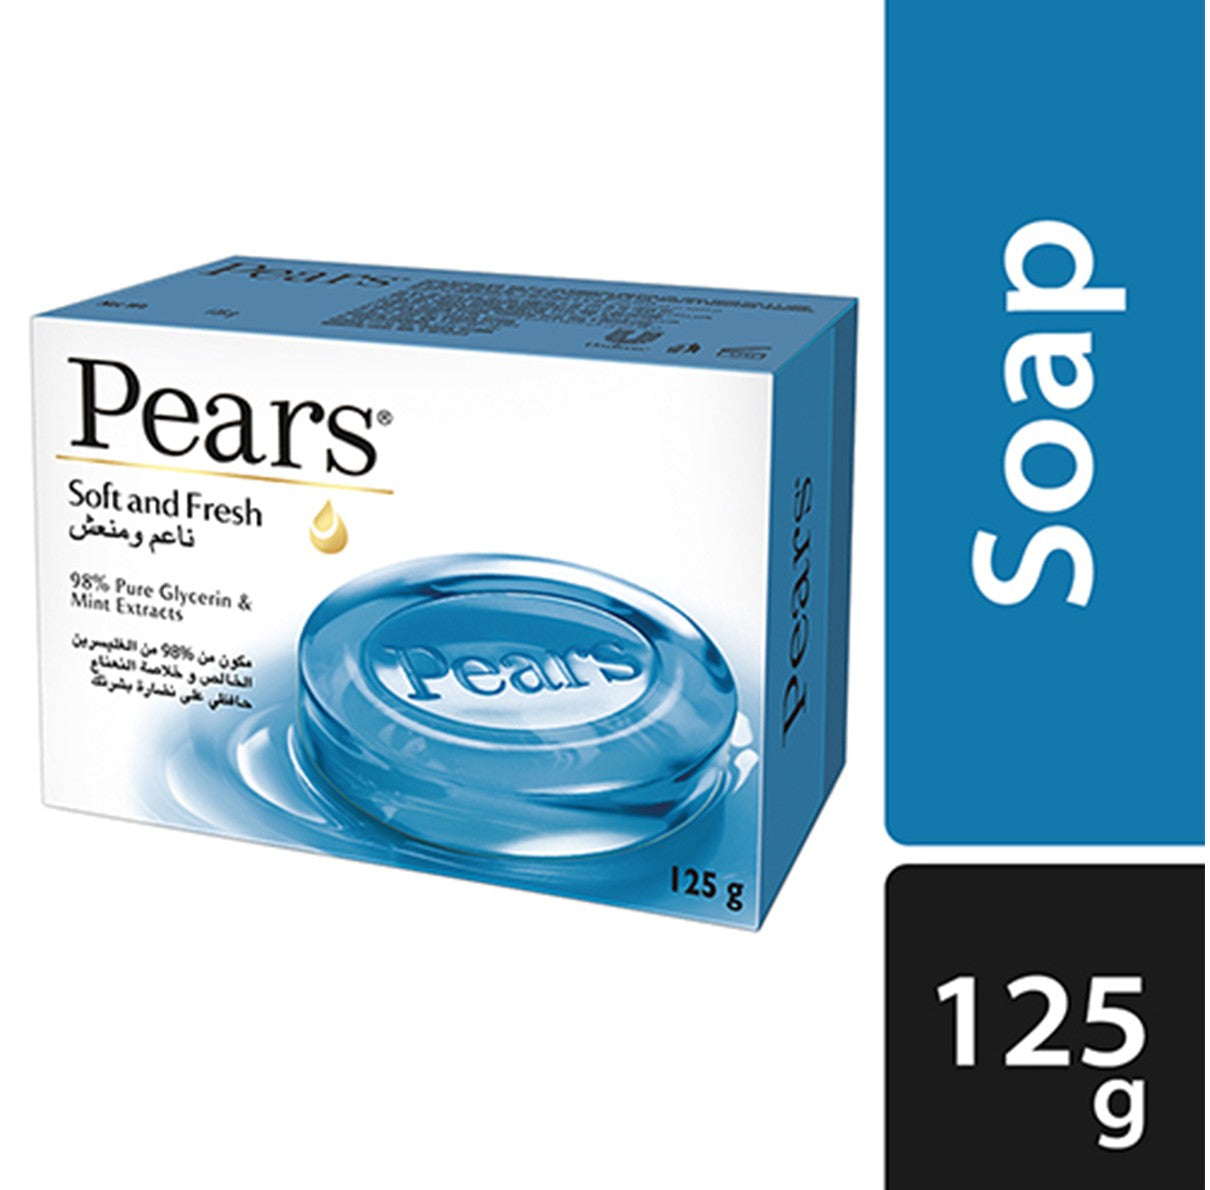 Pears Transparent Glycerin Soap Bar [3.5 oz]